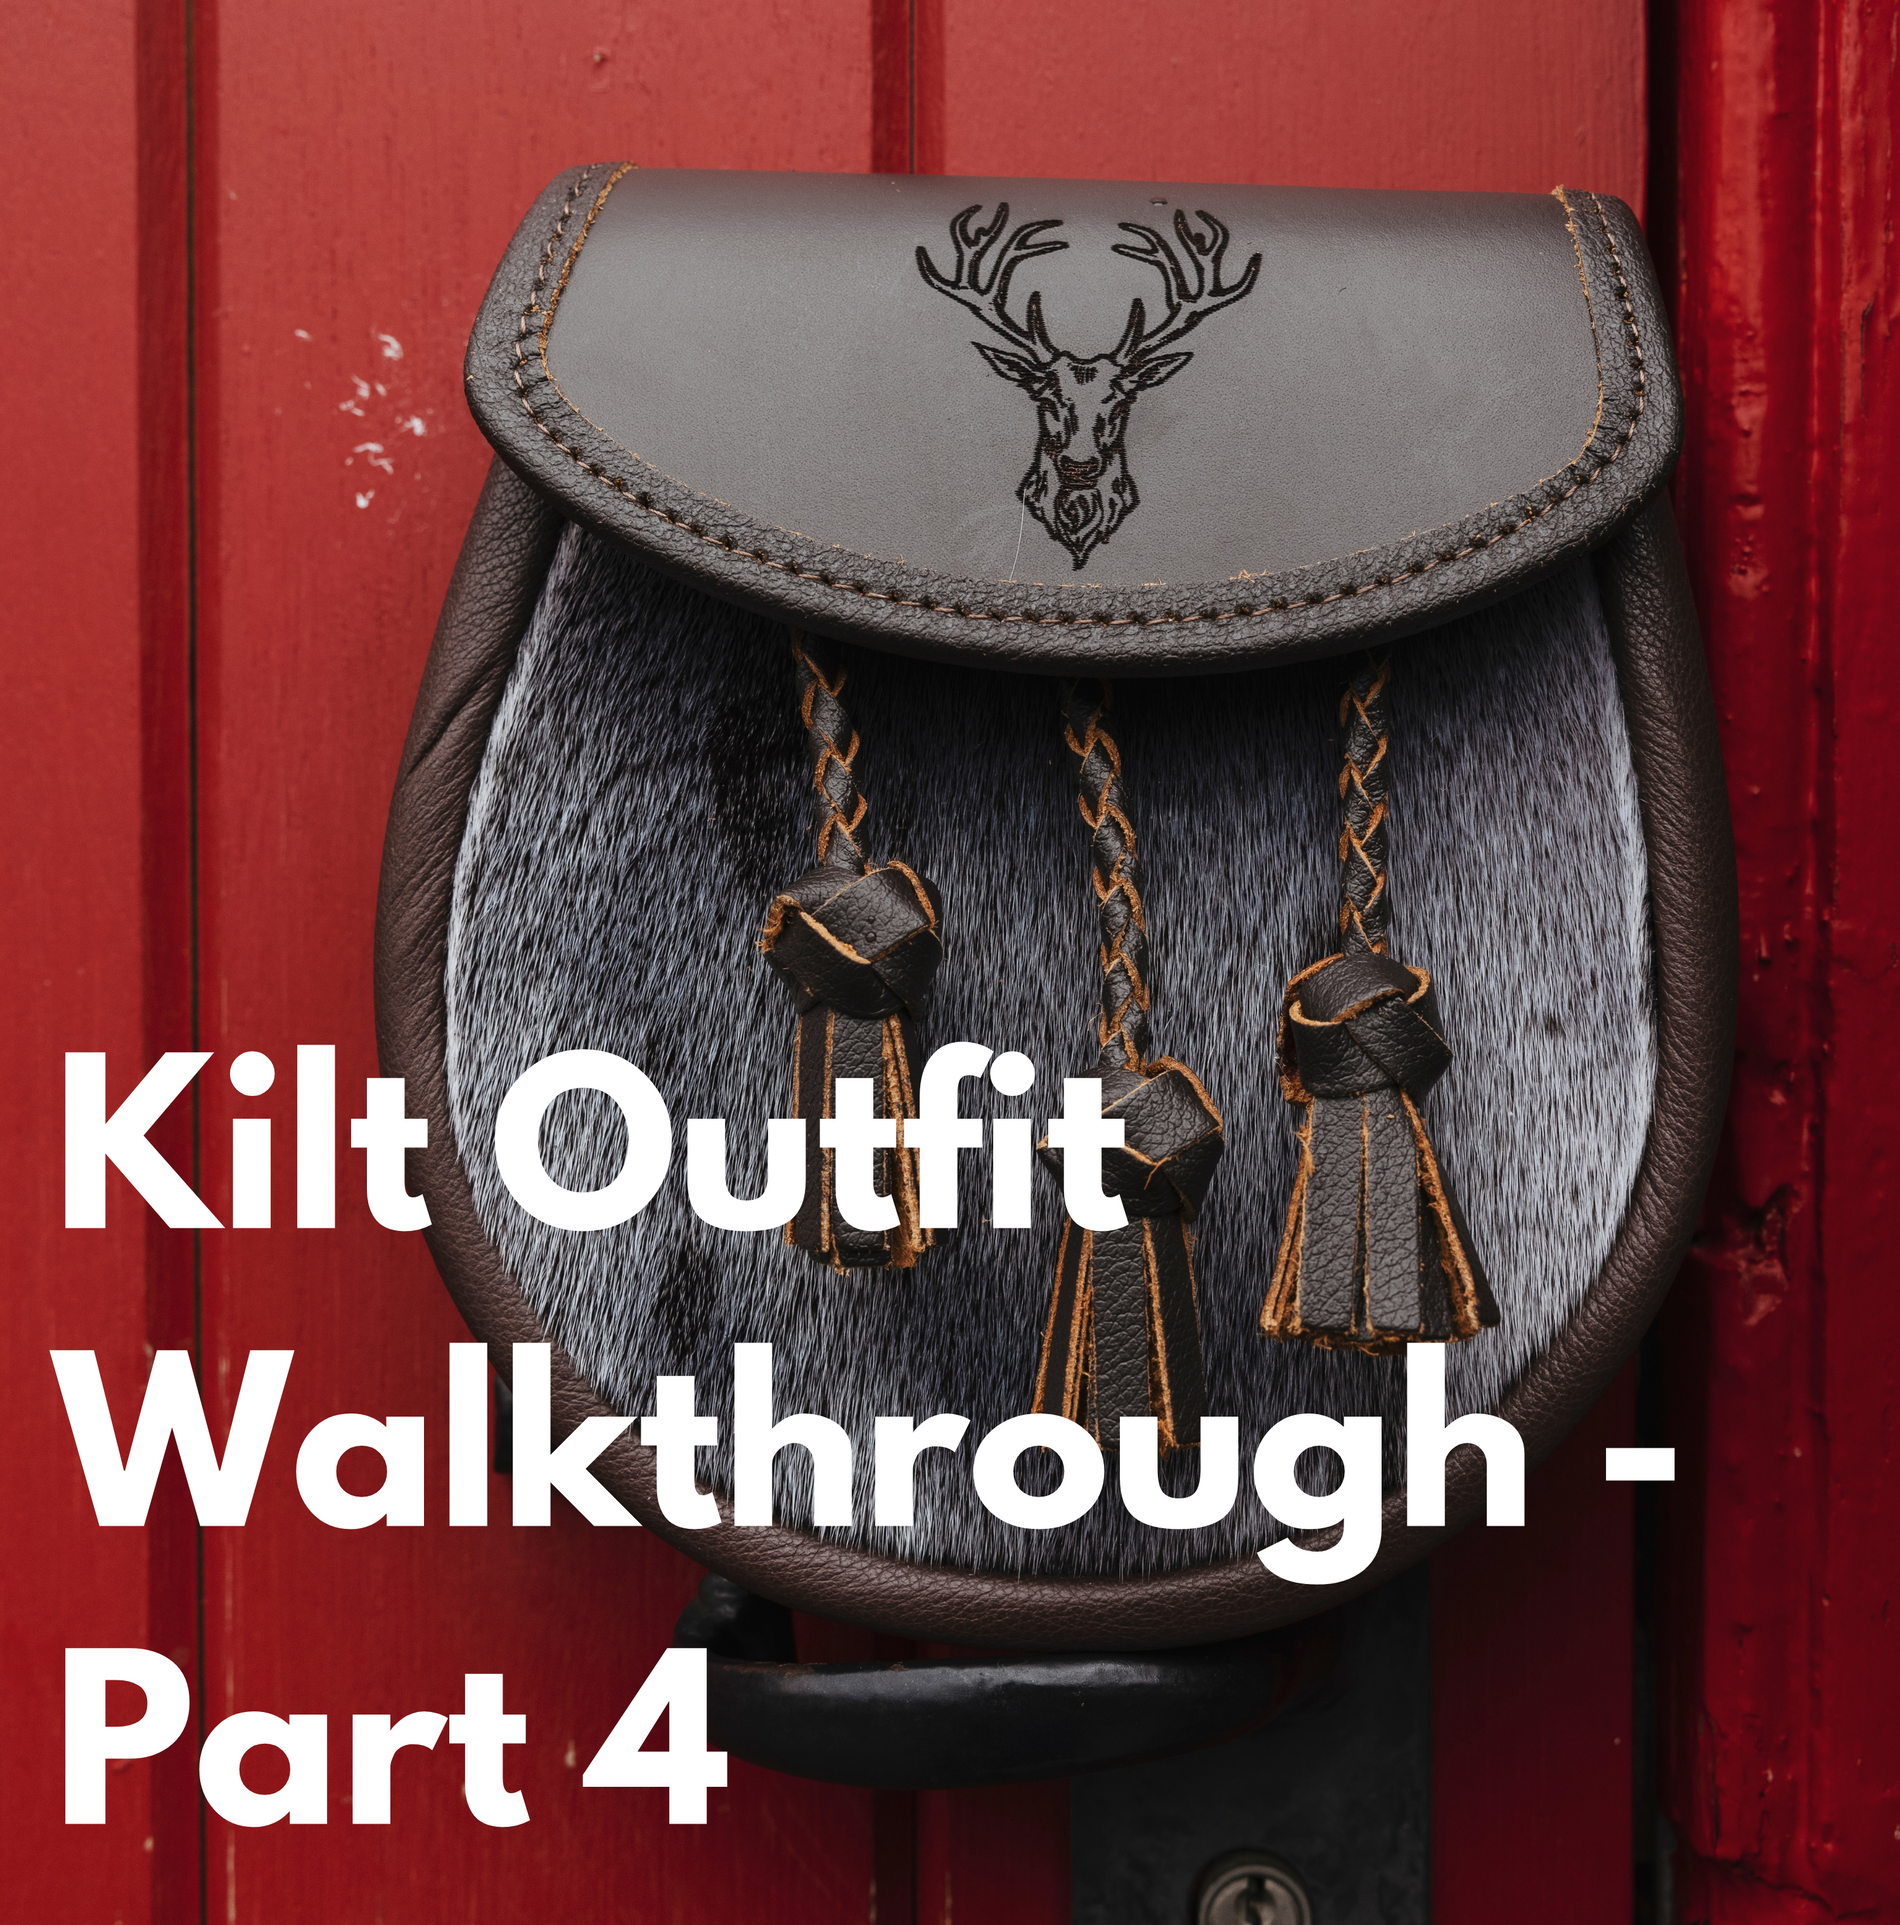 Kilt Outfit Walkthrough - Part 4